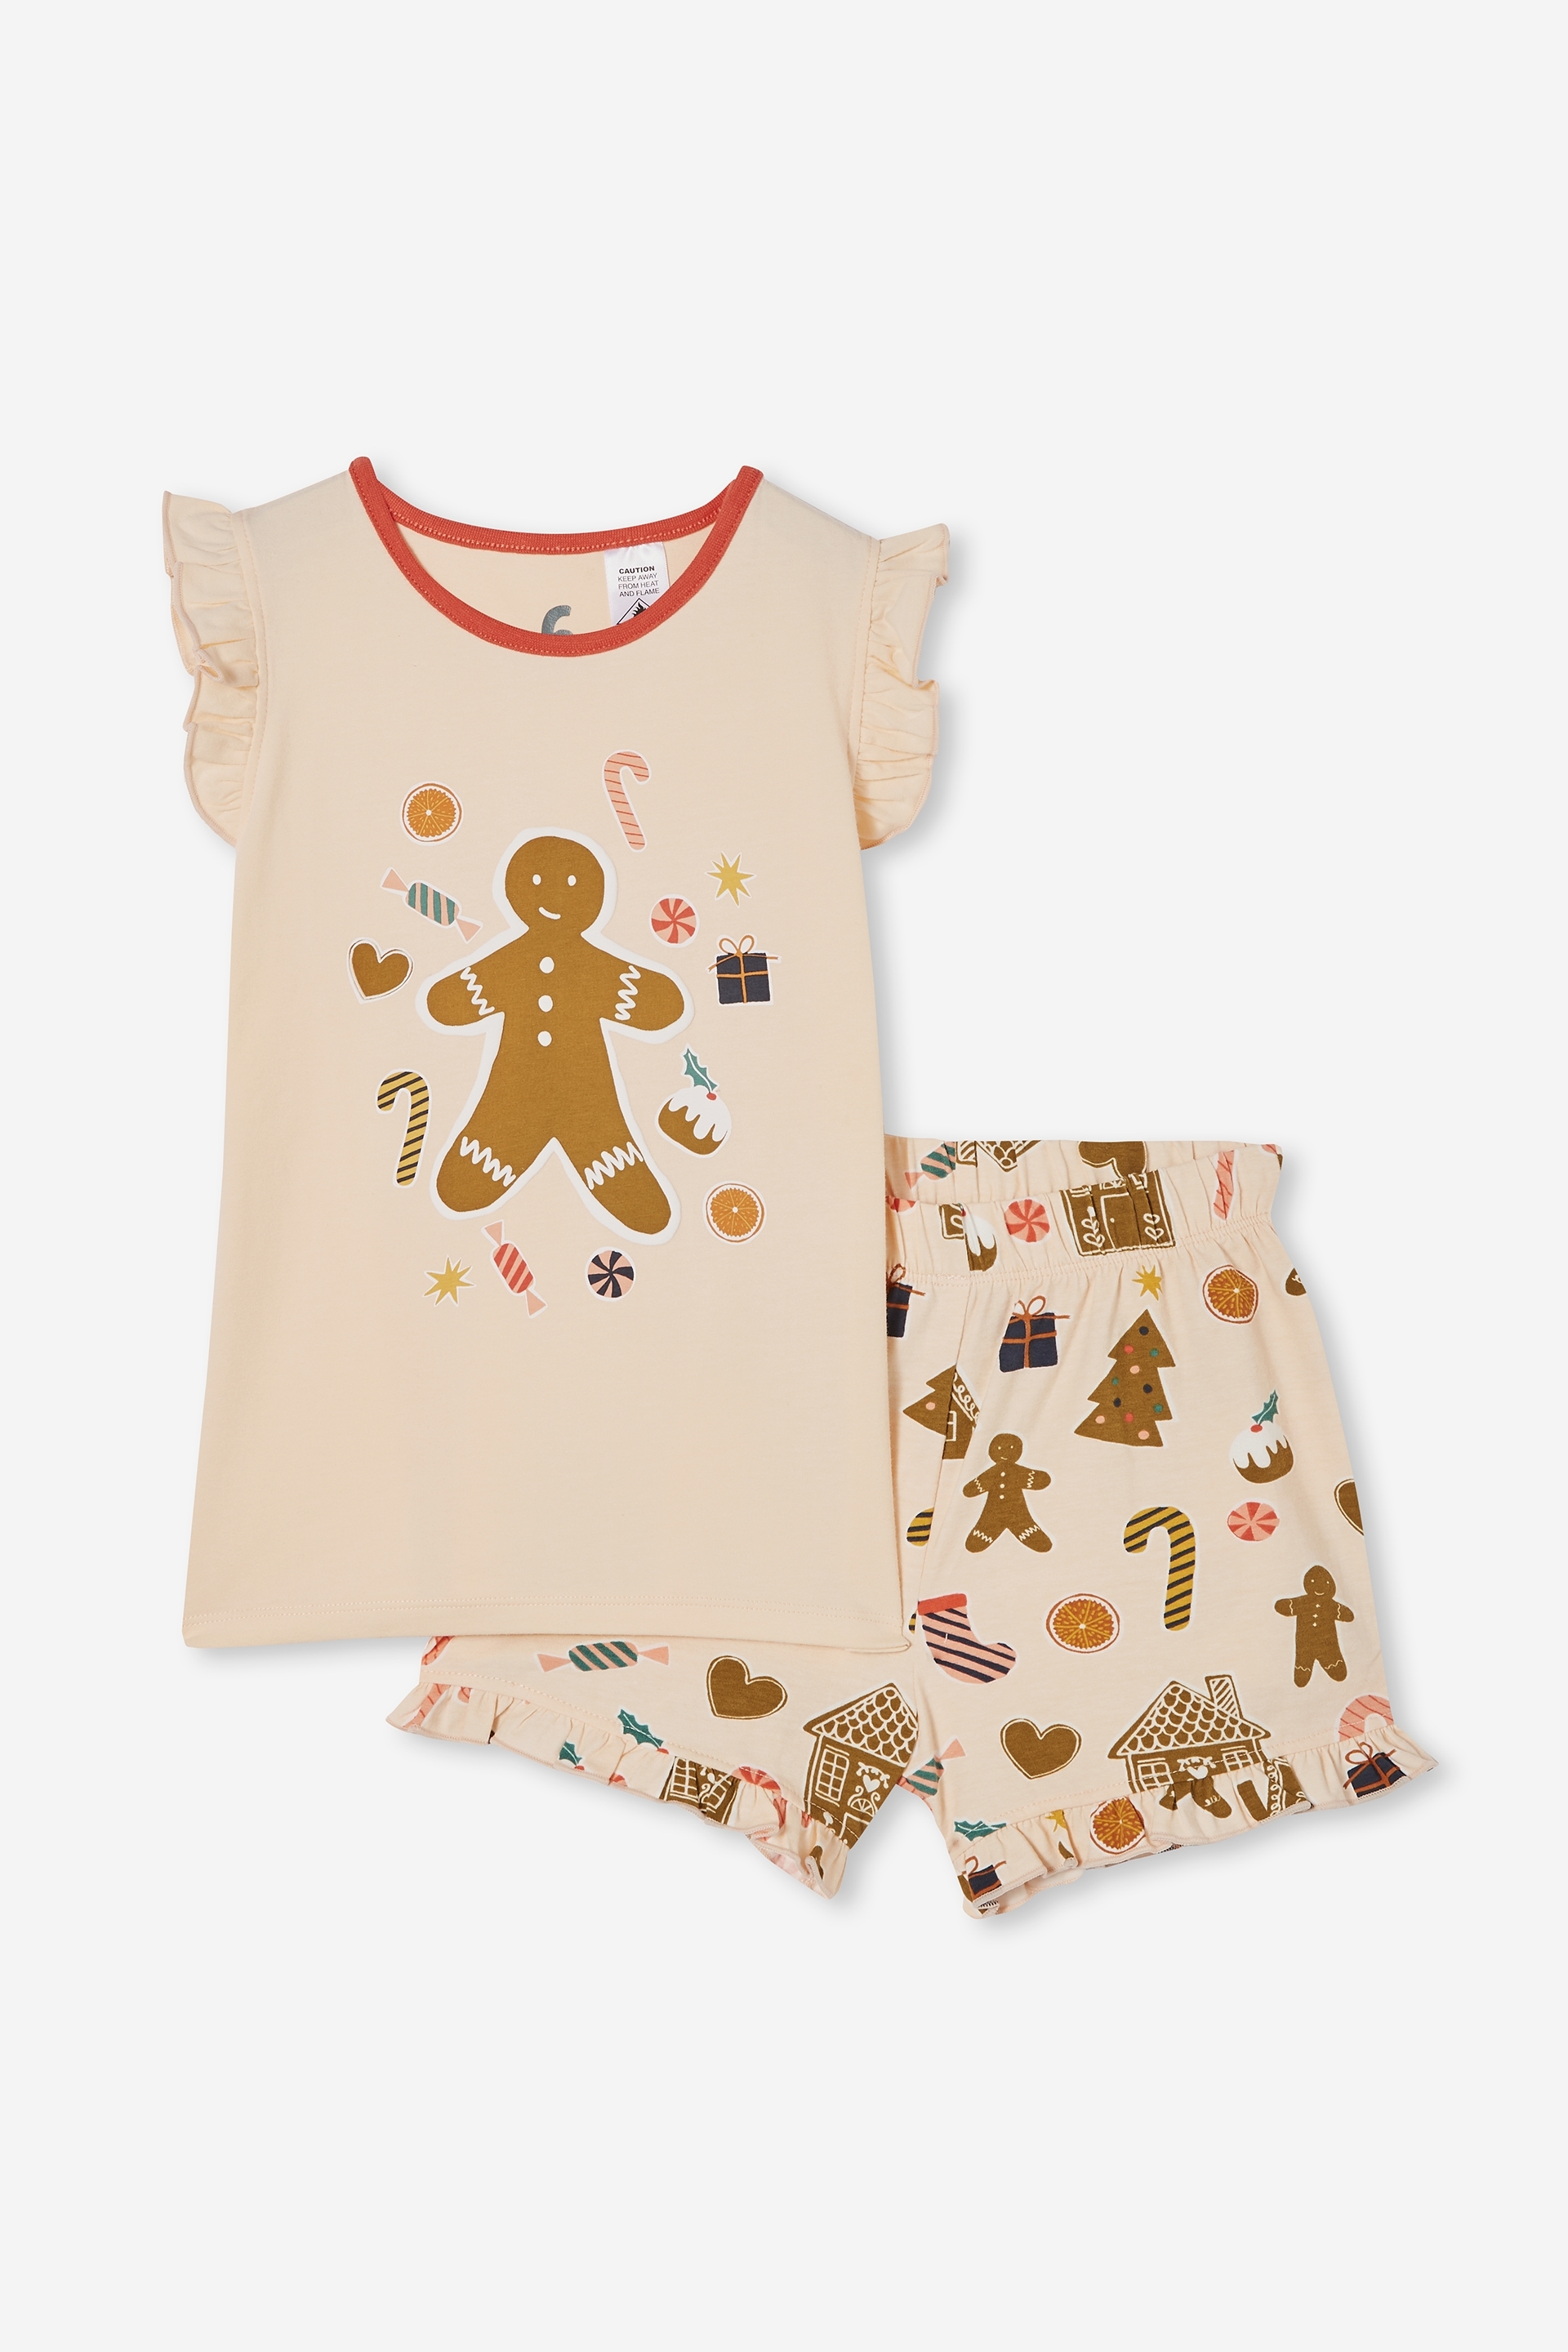 Cotton On Kids - Stacey Short Sleeve Flutter Pyjama Set - Gingerbread xmas/peach tang